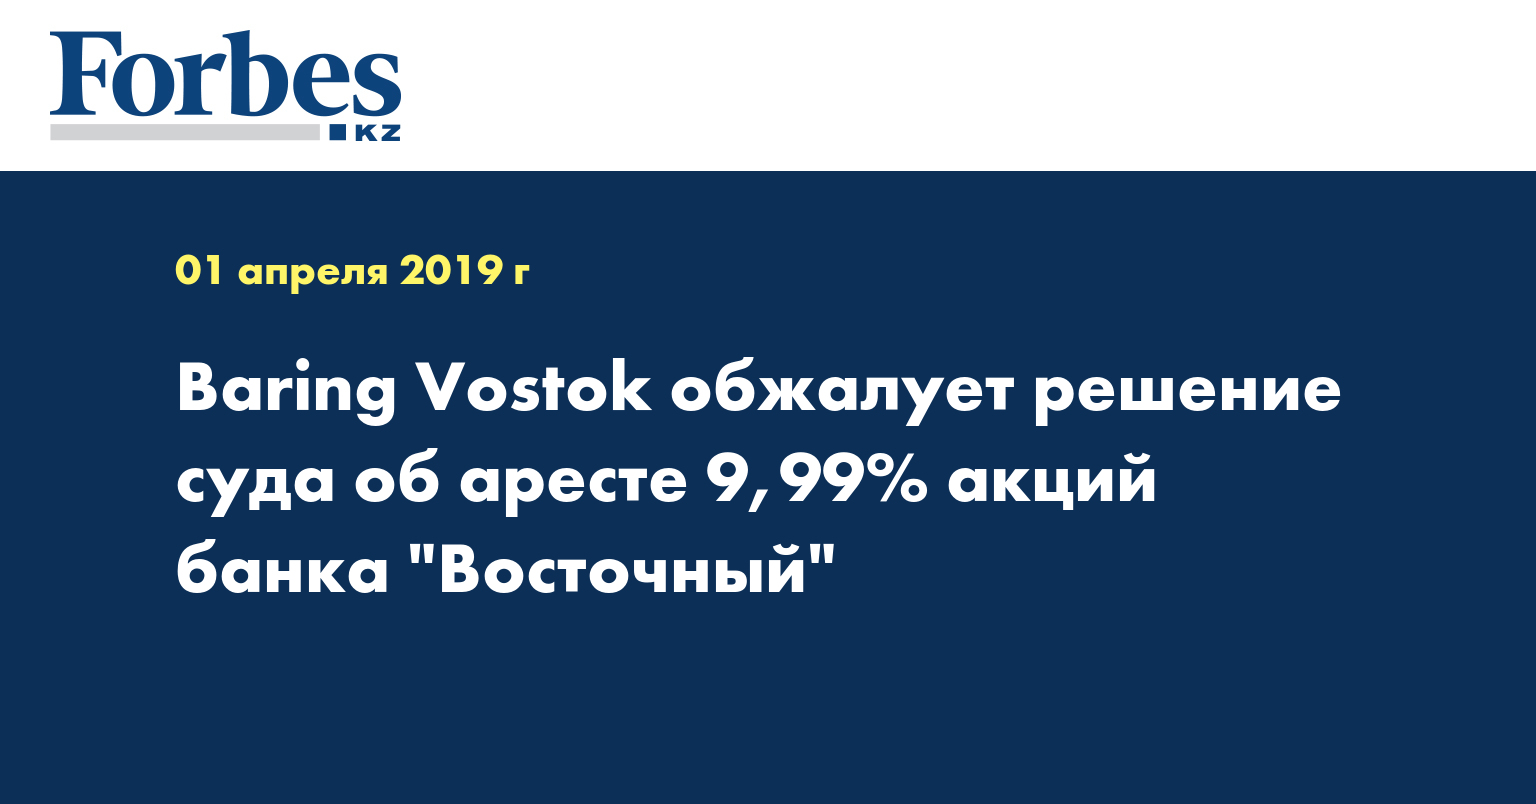 Baring Vostok обжалует решение суда об аресте 9,99% акций банка 